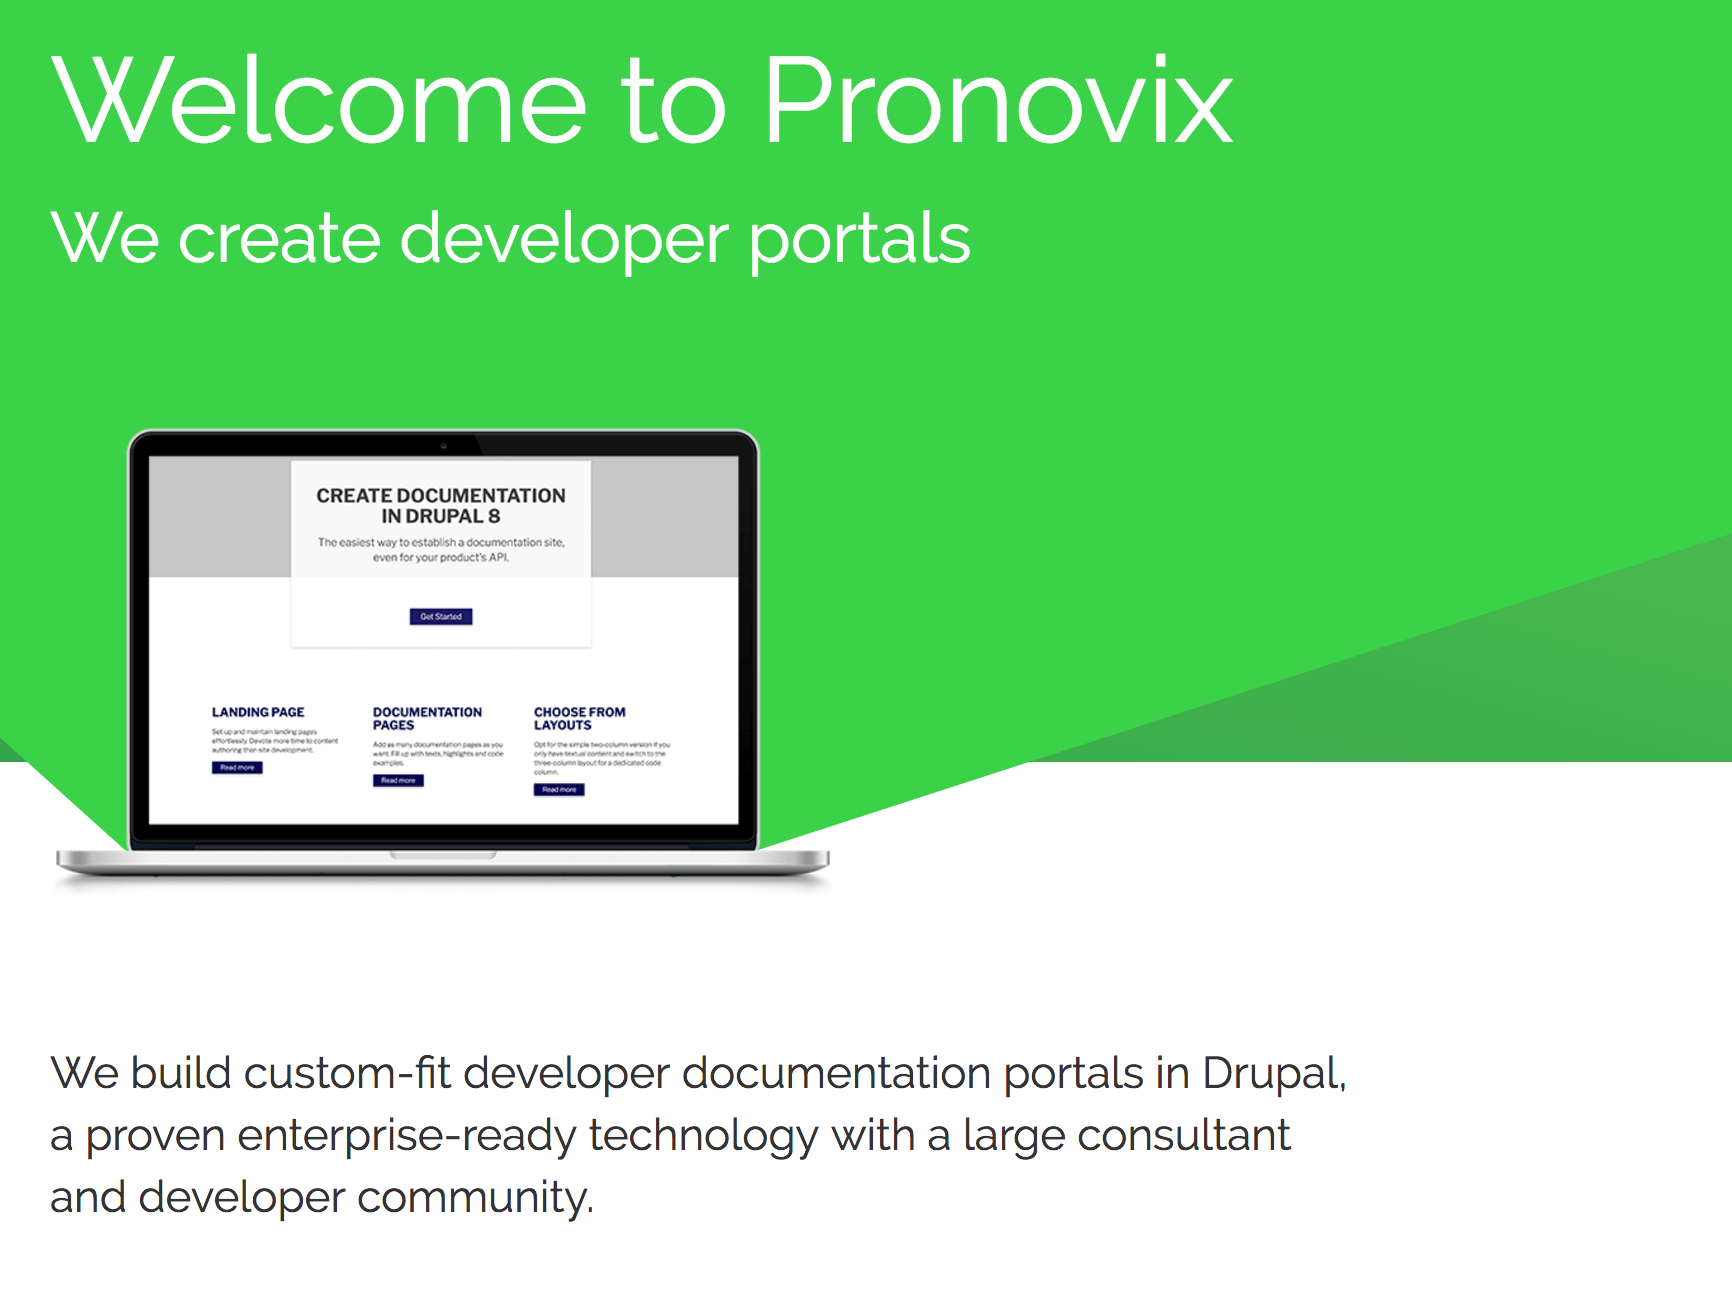 Pronovix